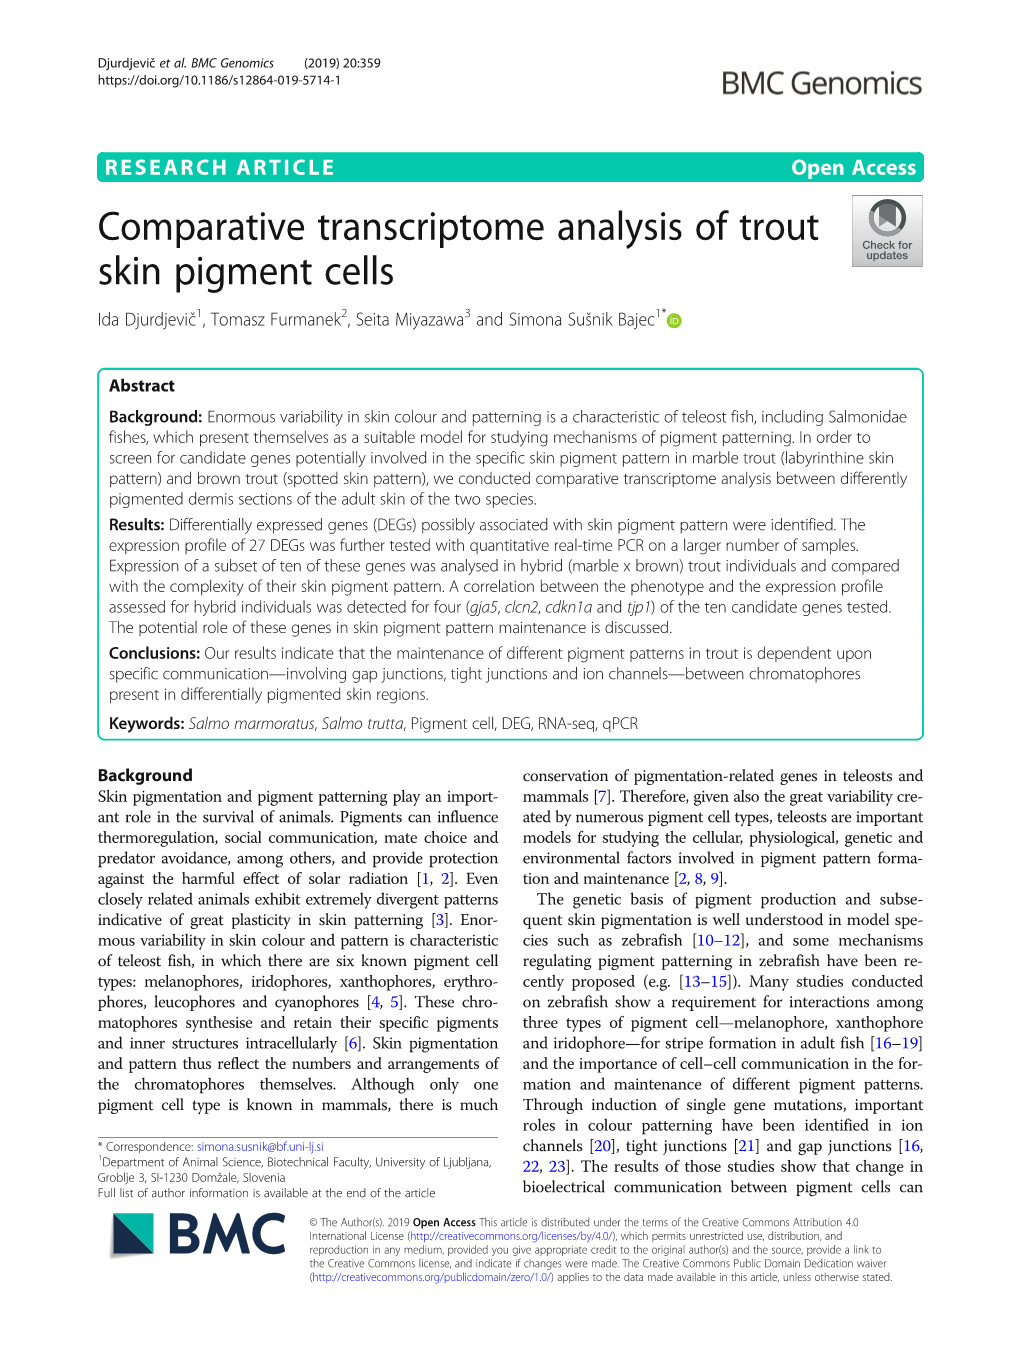 Comparative Transcriptome Analysis of Trout Skin Pigment Cells Ida Djurdjevič1, Tomasz Furmanek2, Seita Miyazawa3 and Simona Sušnik Bajec1*